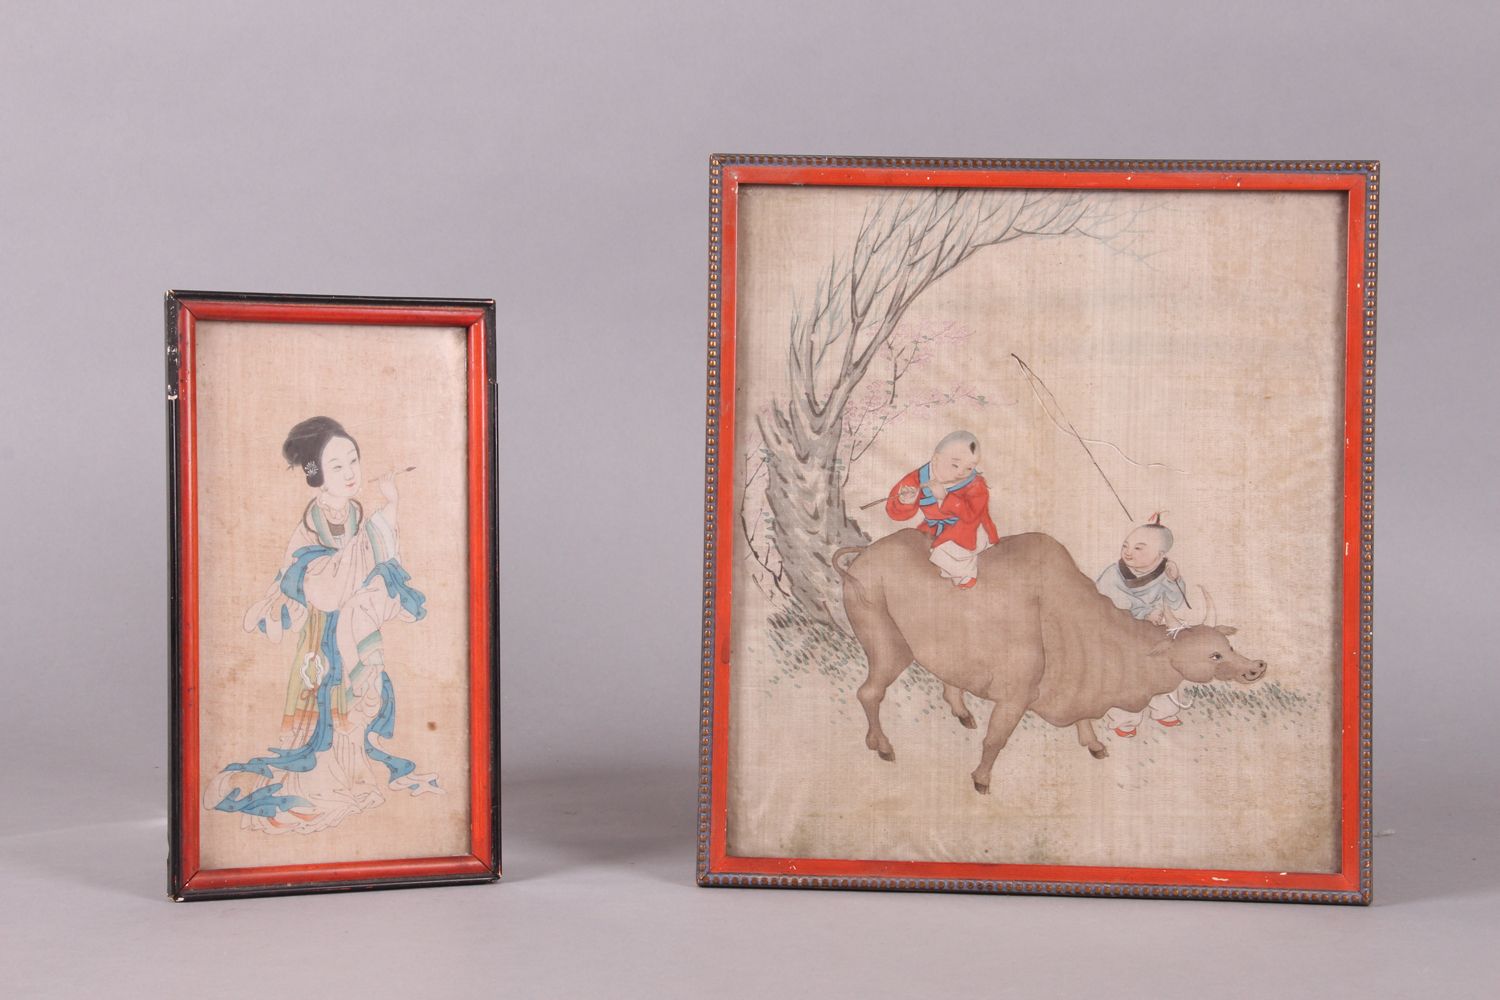 Anonyme. "两幅中国丝绸画" 一套2件。"两个孩子赶着水牛"（25 x 23）和 "拿着毛笔的年轻女孩"（20.5 x 10.5）。